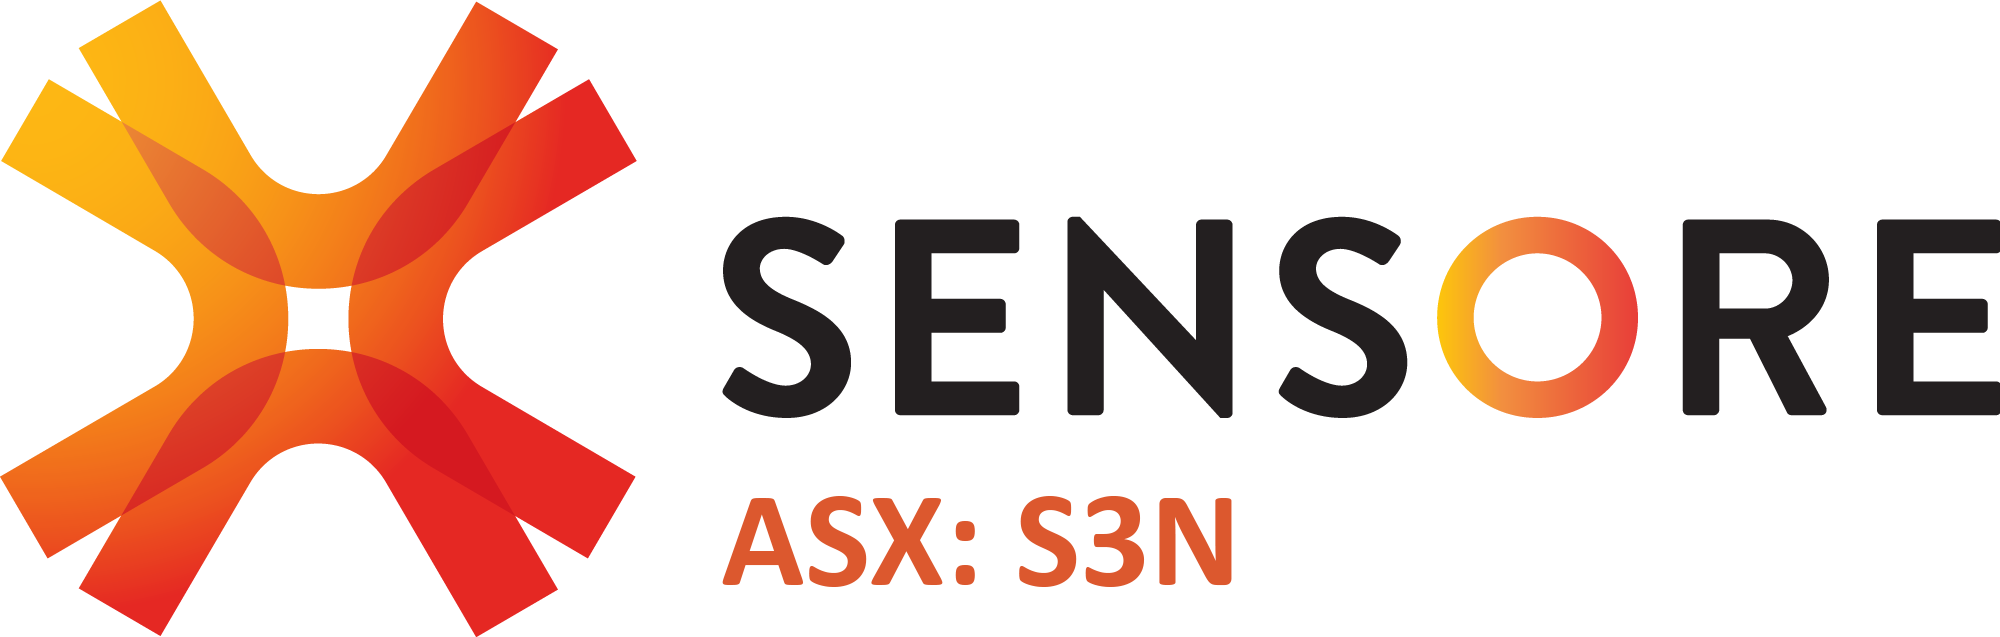 SensOre Ltd